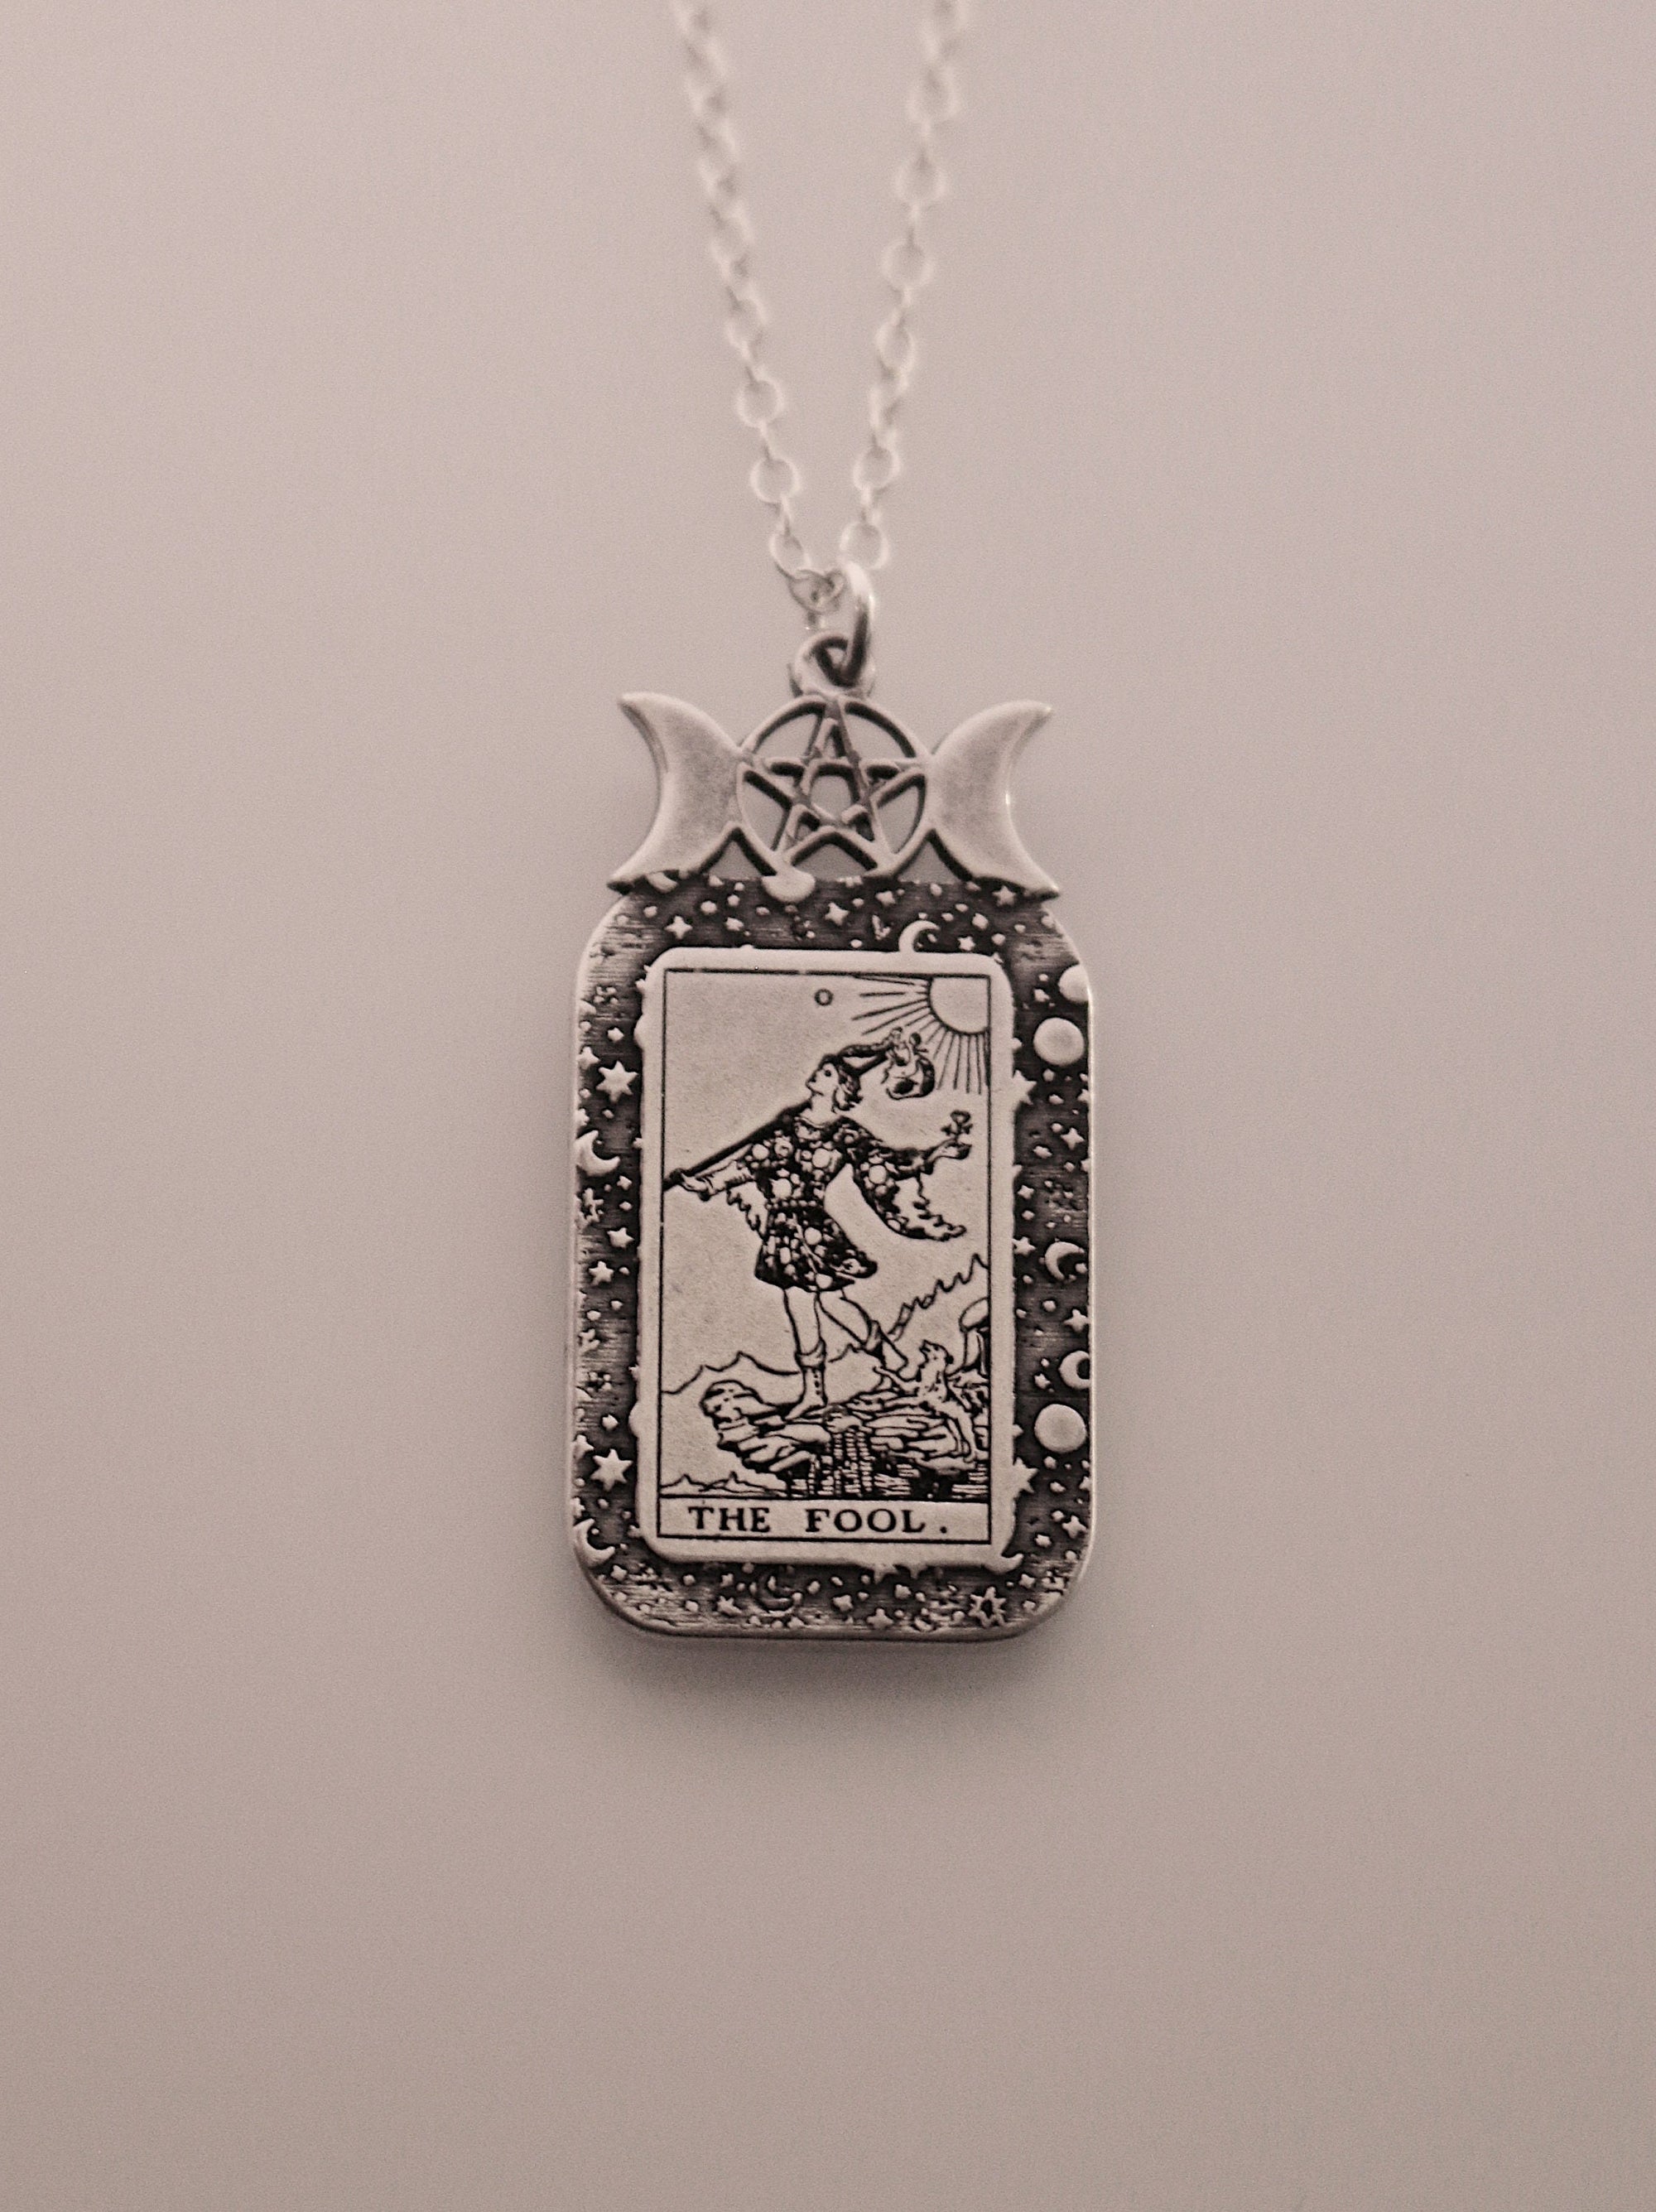 22 CARDS: Dainty Tarot Card Celestial Triple Moon Goddess Charm Necklace | Best Friend Birthday Gift | Tarot Card Necklace | Mystic Jewelry